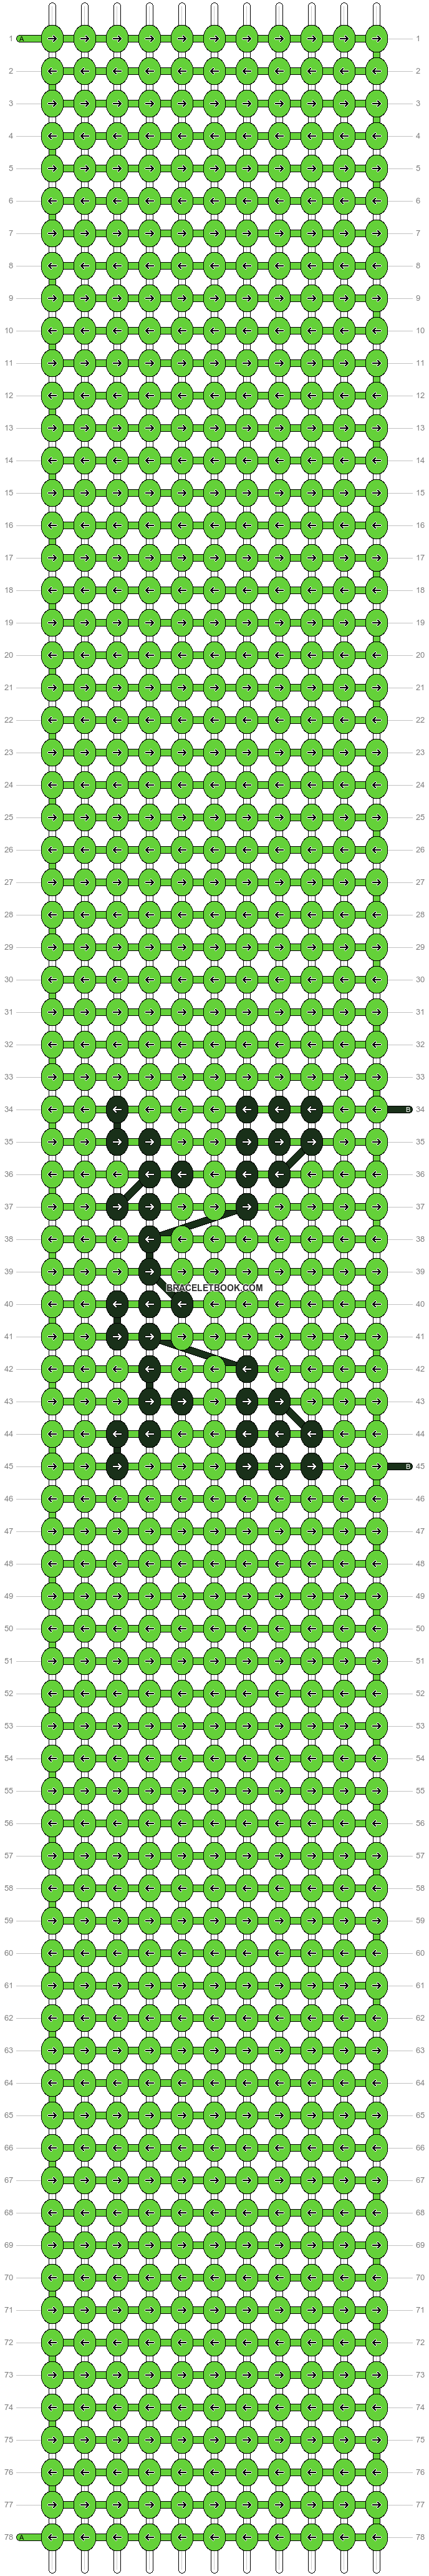 Alpha pattern #58839 variation #169197 pattern